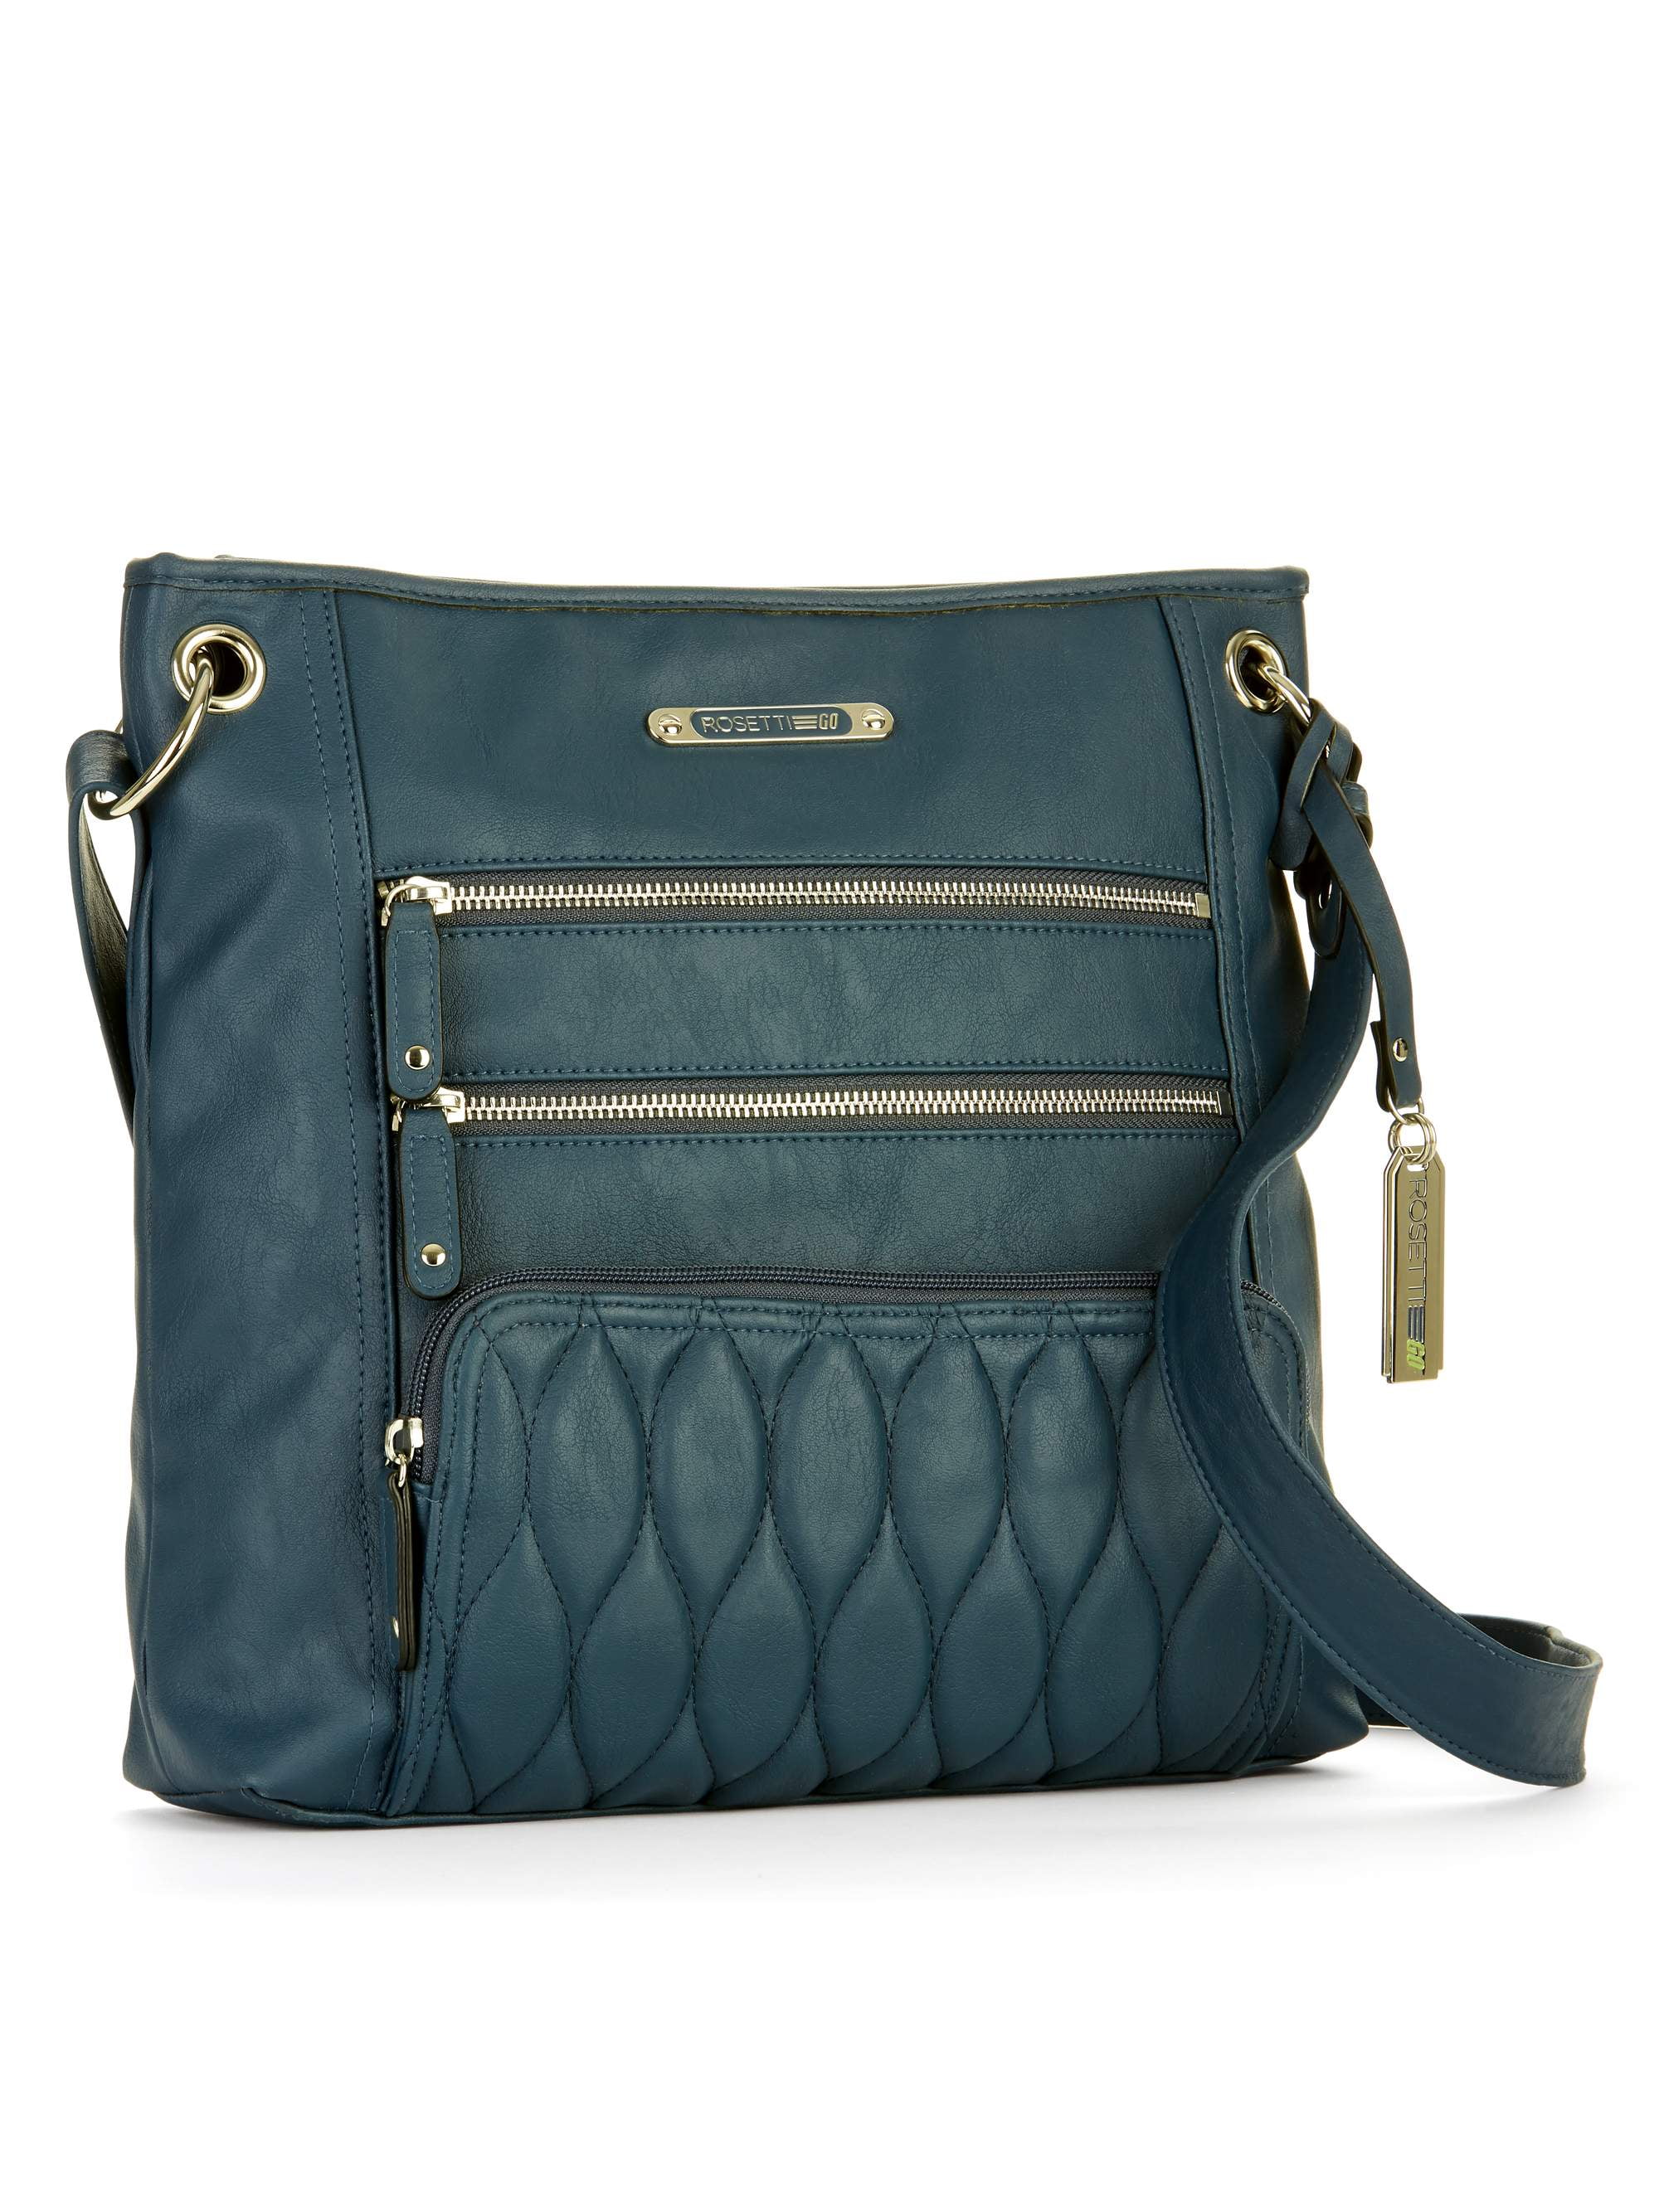 Rosetti Purse Navy Blue Floral Handbag Shoulder Bag | eBay